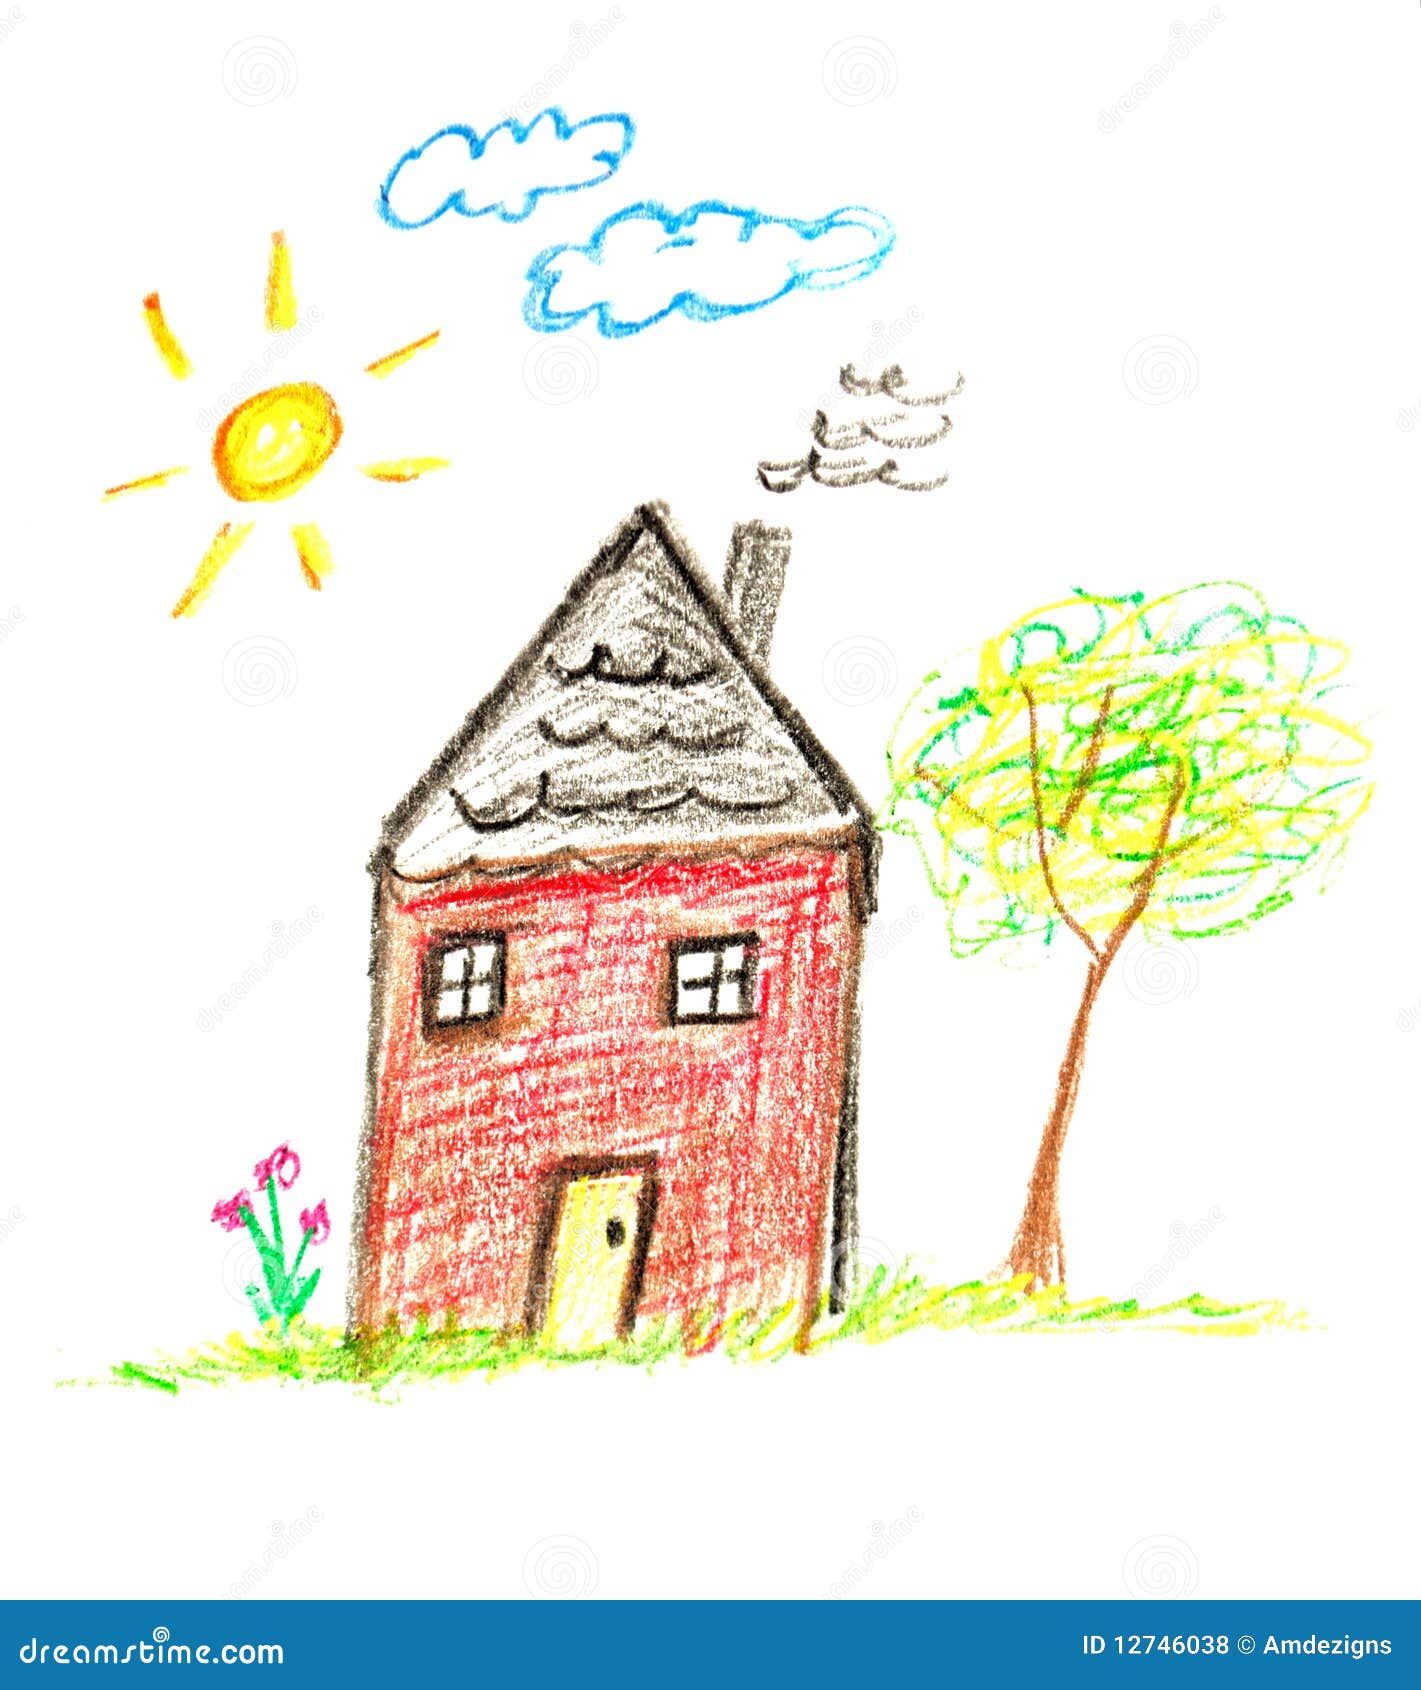 crayon-house-12746038.jpg